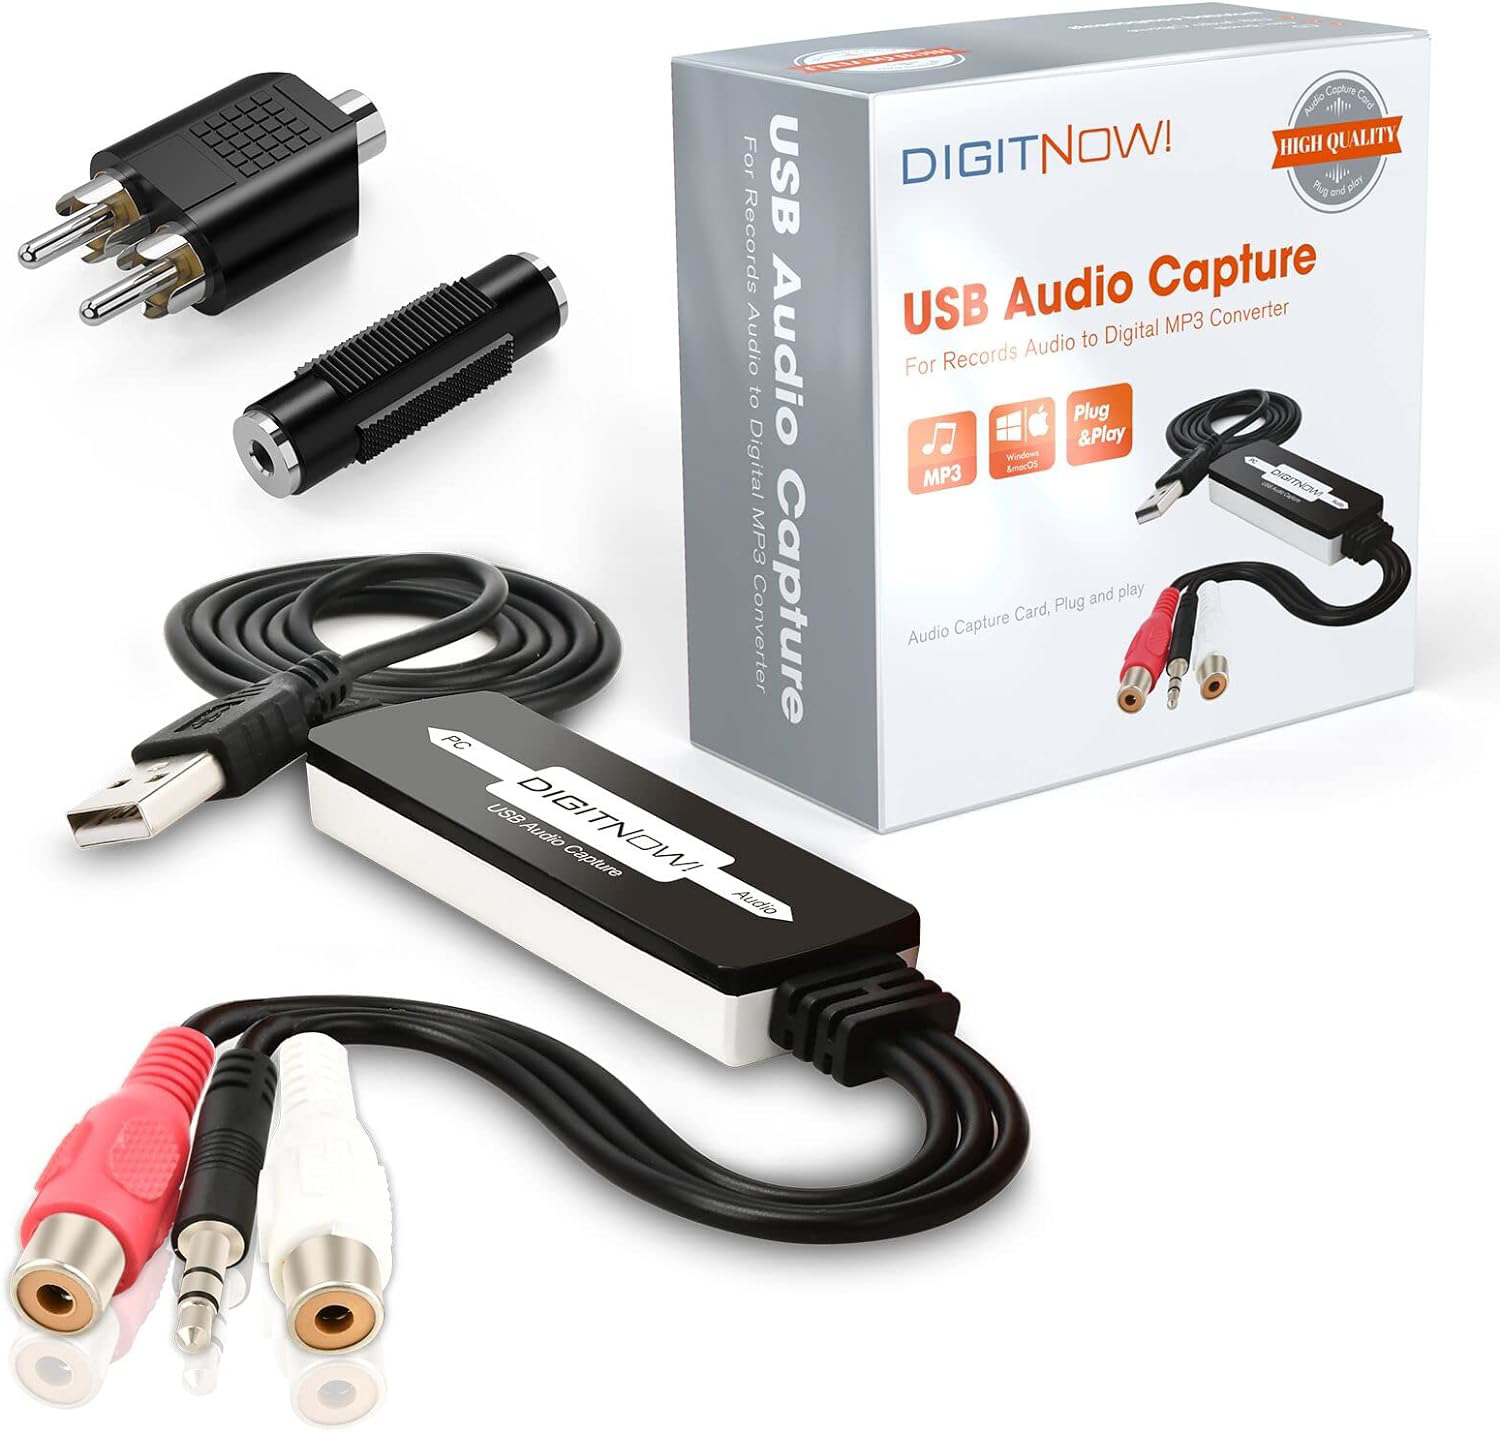 DIGITNOW USB 2.0 Digital Audio Capture Card for Vinyl Records Win7/8/10and Mac